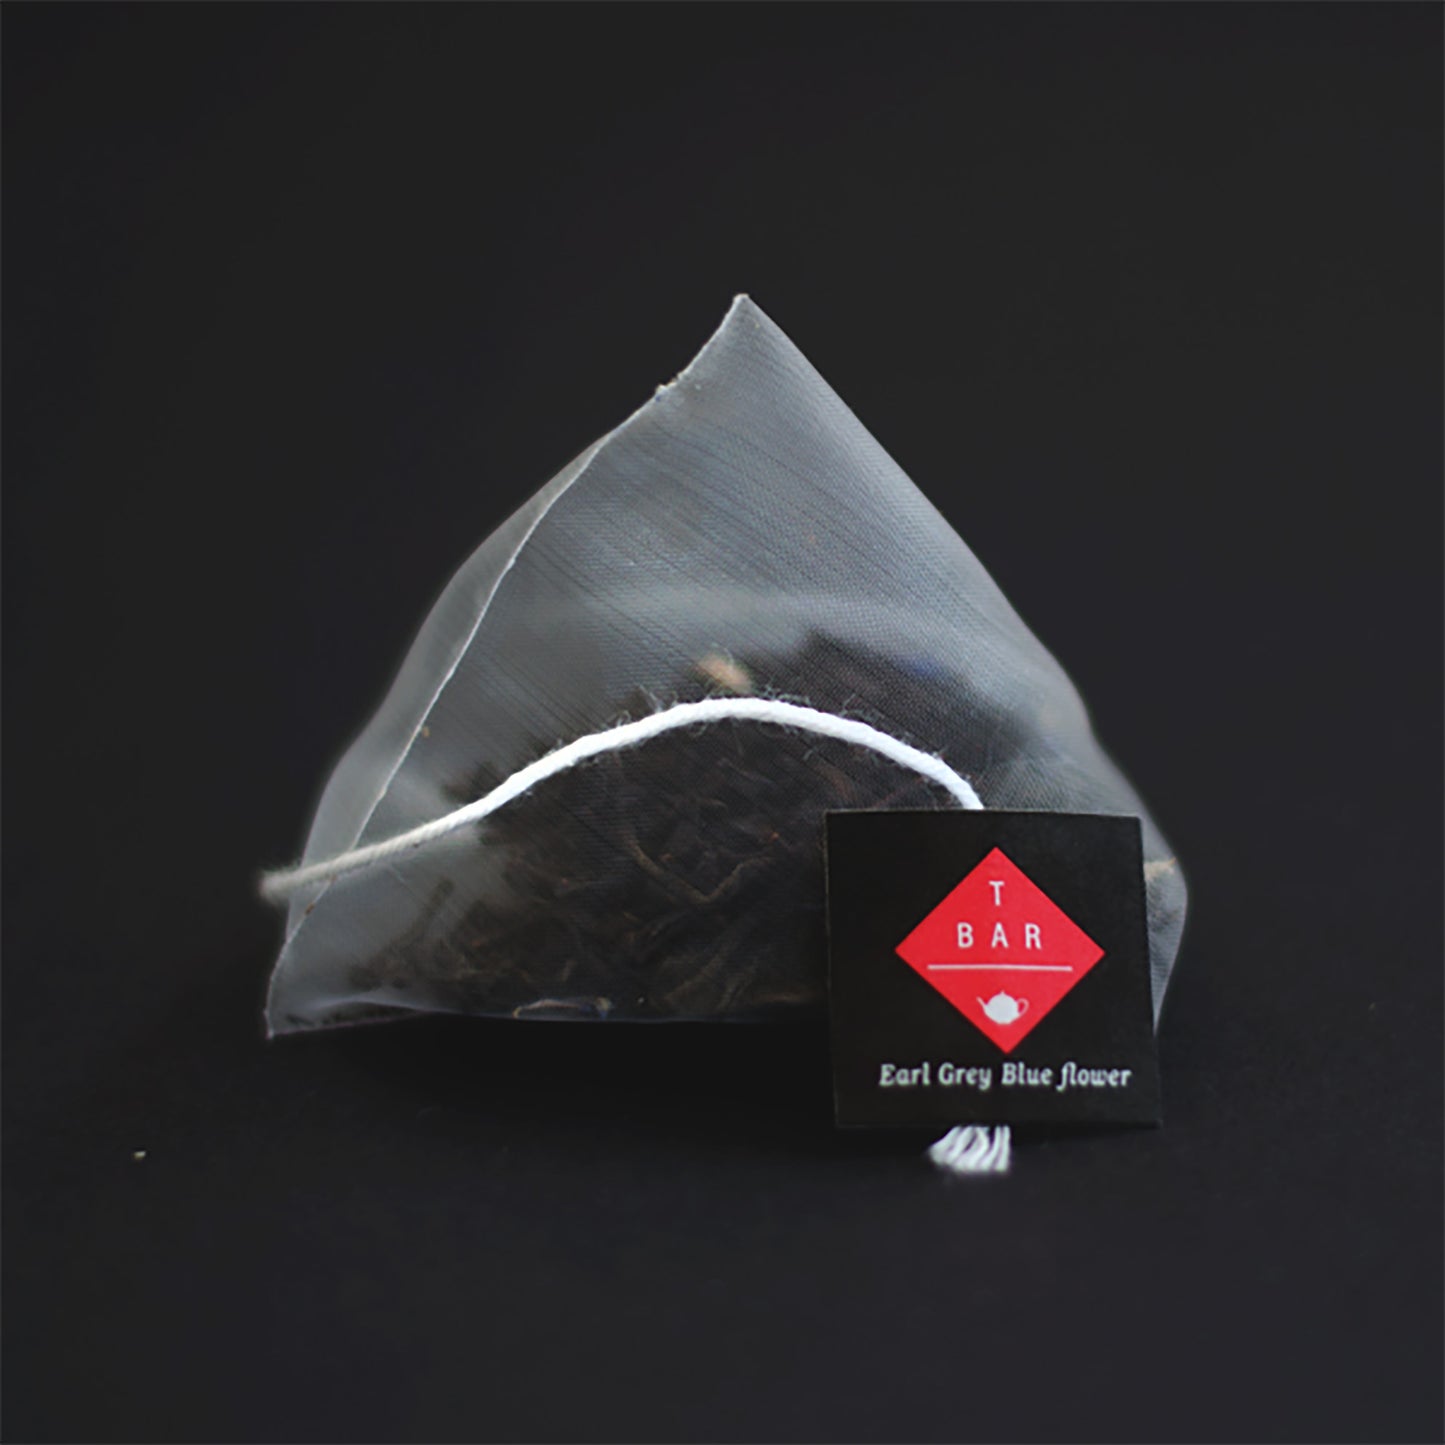 Earl Grey & Blue-flower "T-Bar" 50 Biodegradable Tea Bags